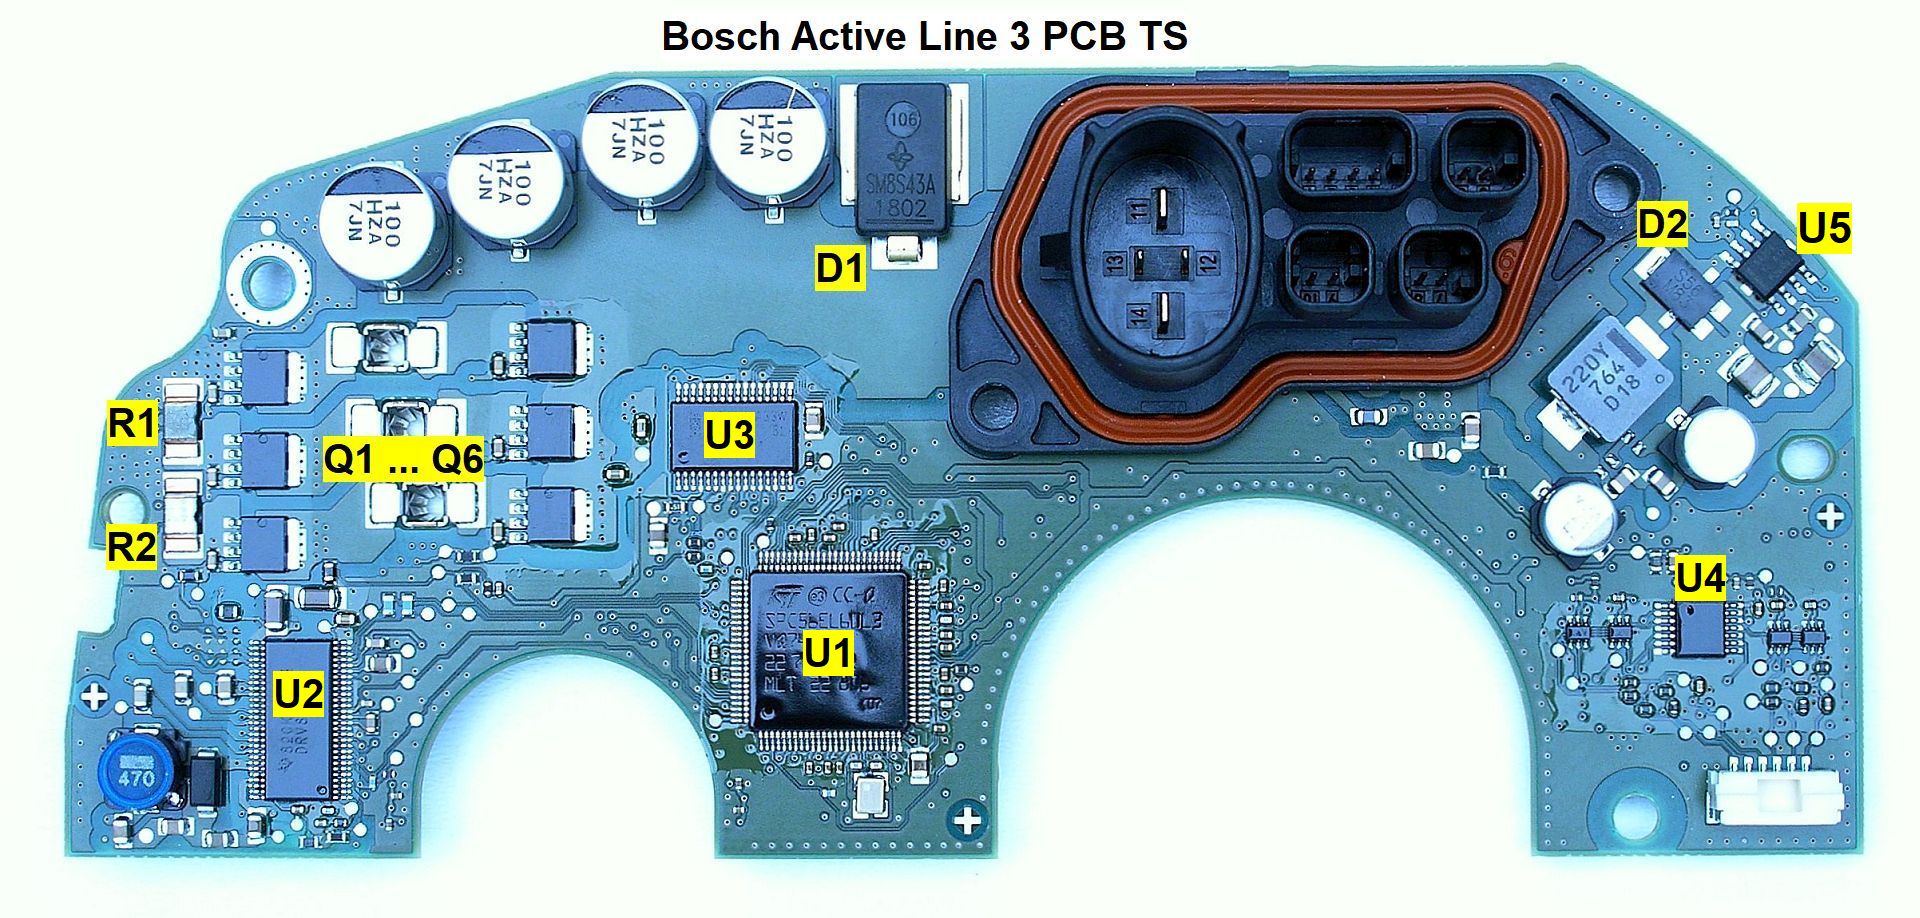 Bosch-active-line-3-PCB-TS.jpg